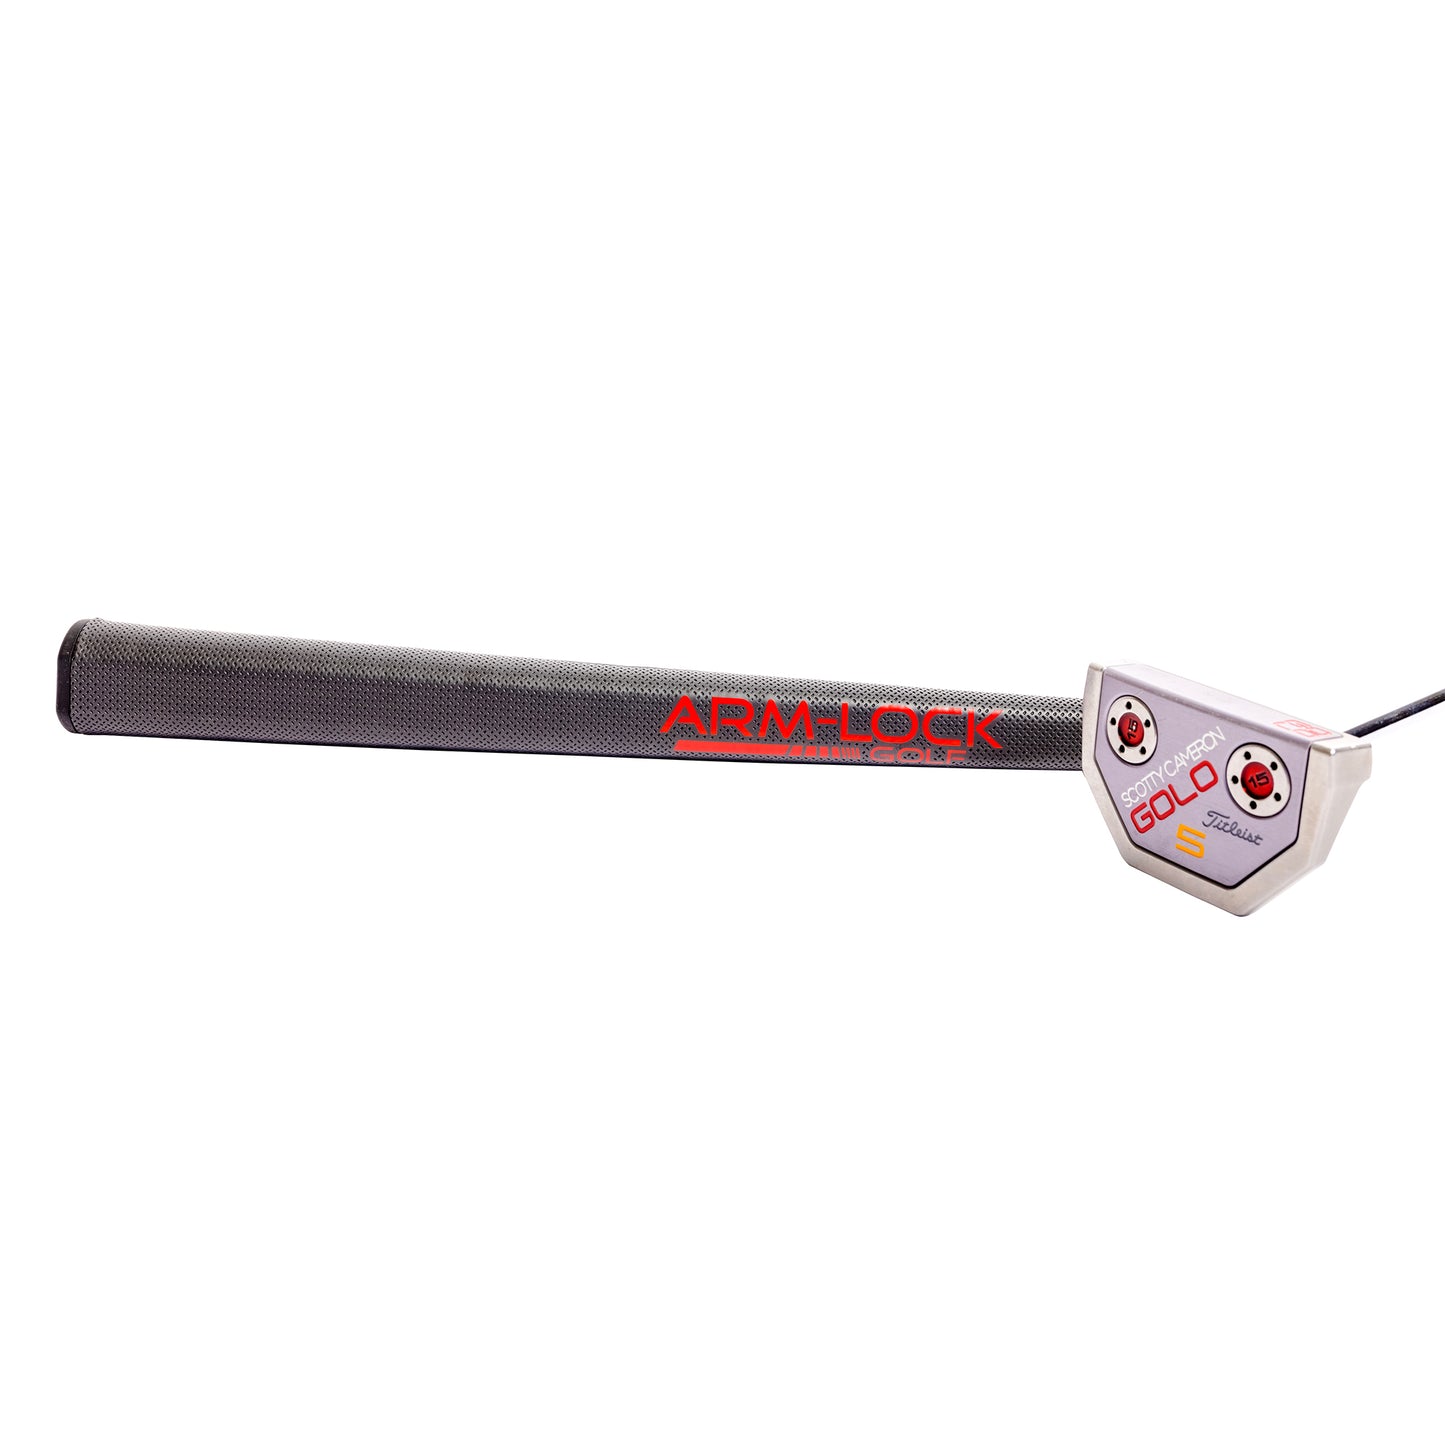 Arm Lock Putter Grip by Arm Lock Golf  AL3 Converter Grip in Black and Red - Arm-Lock Golf